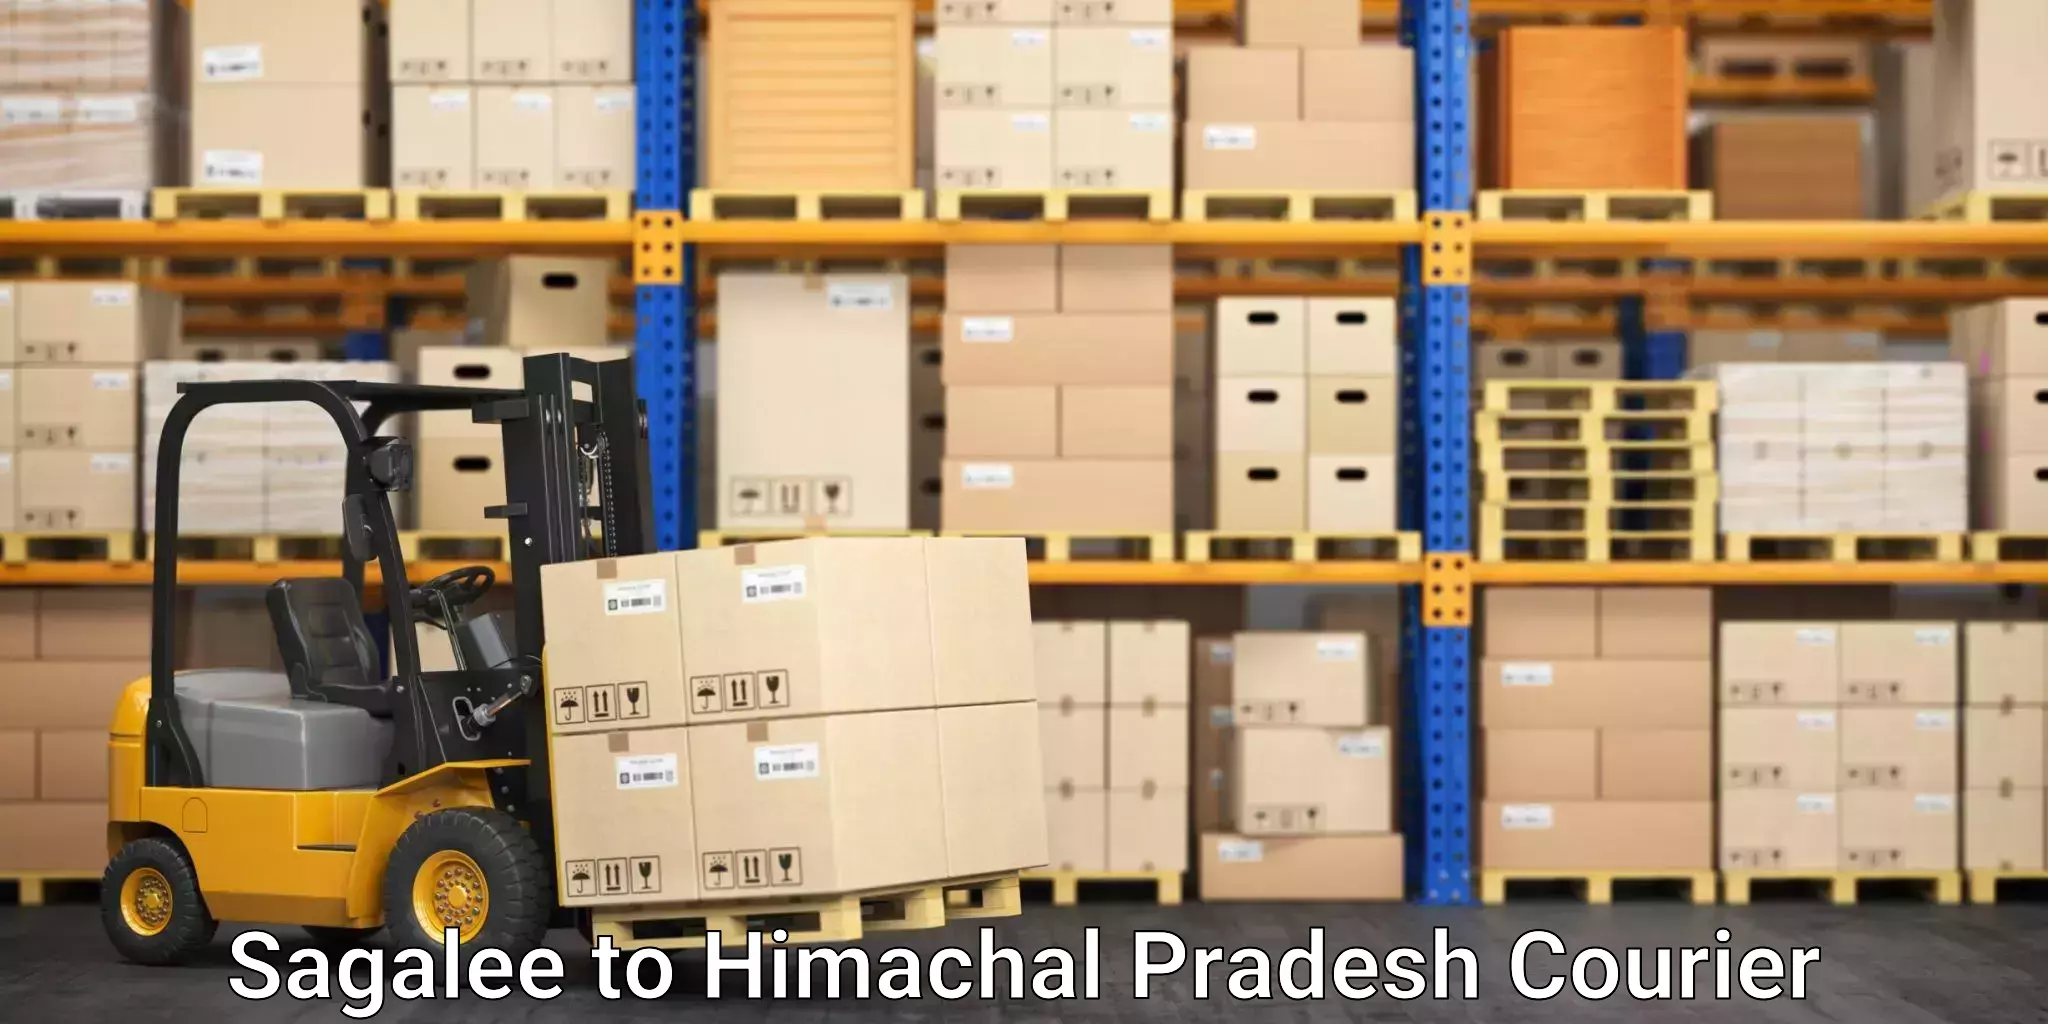 Expedited shipping methods Sagalee to Himachal Pradesh